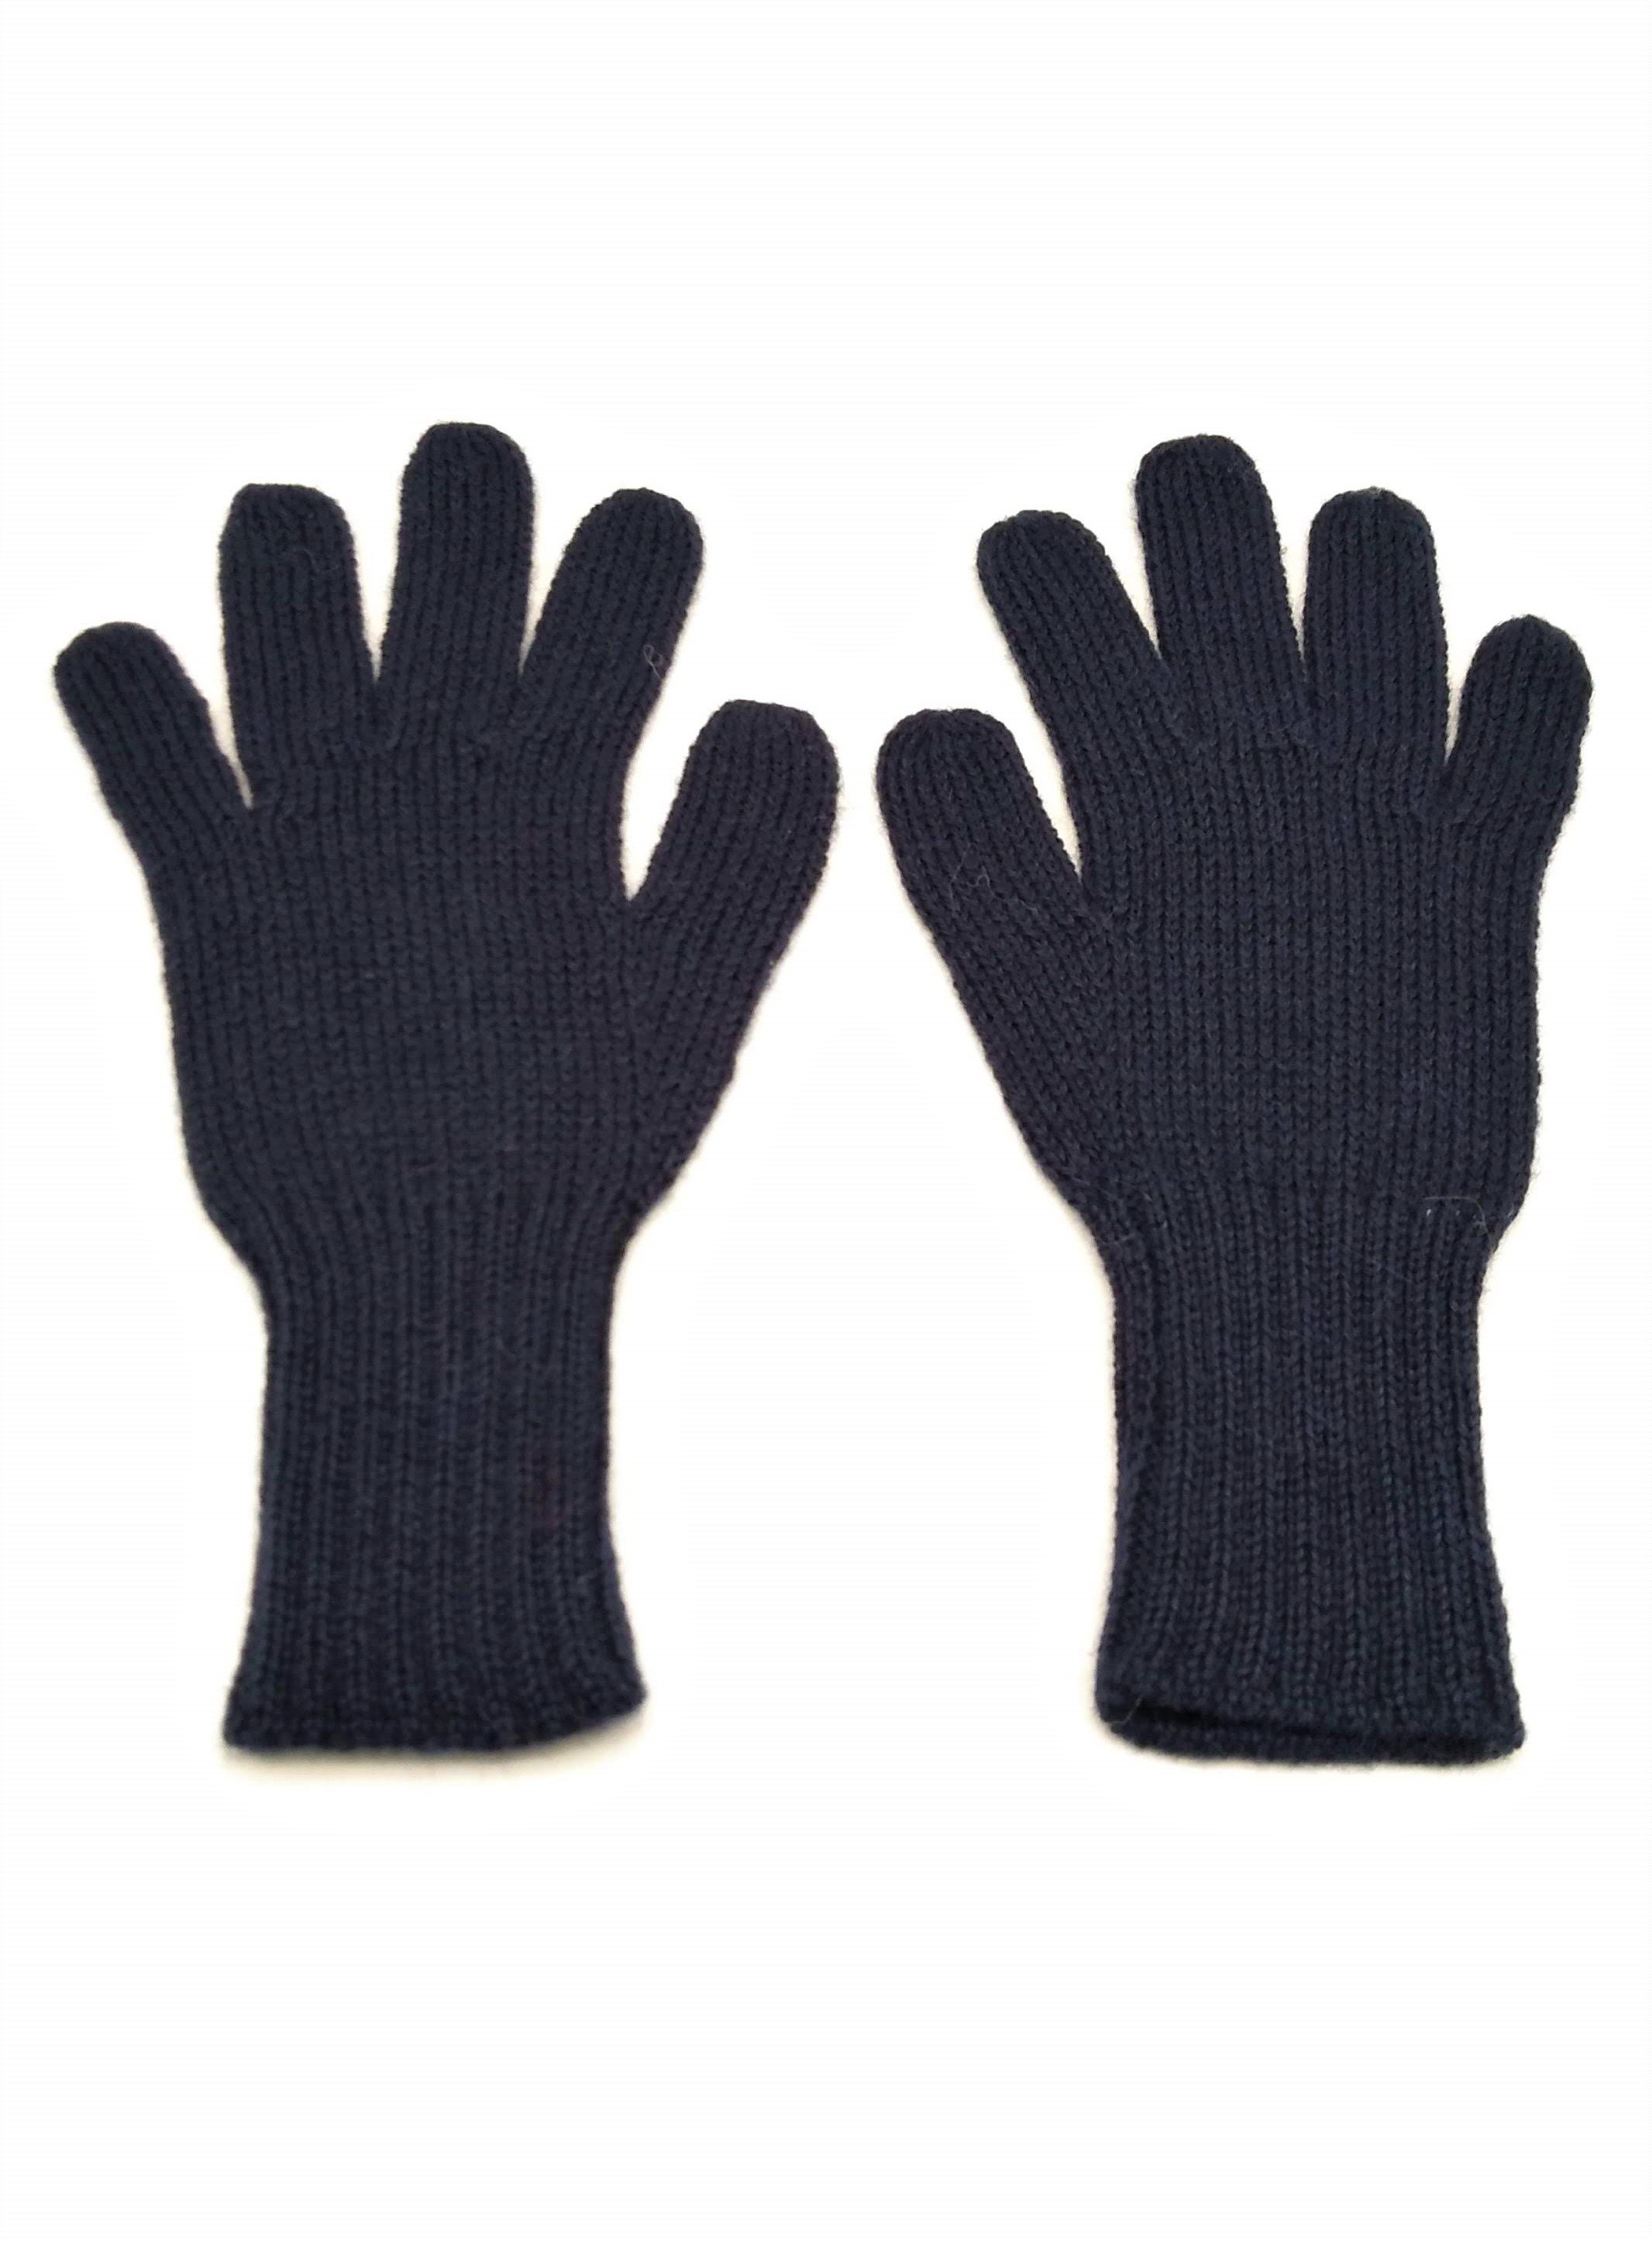 100% Alpaca Gloves | Etsy